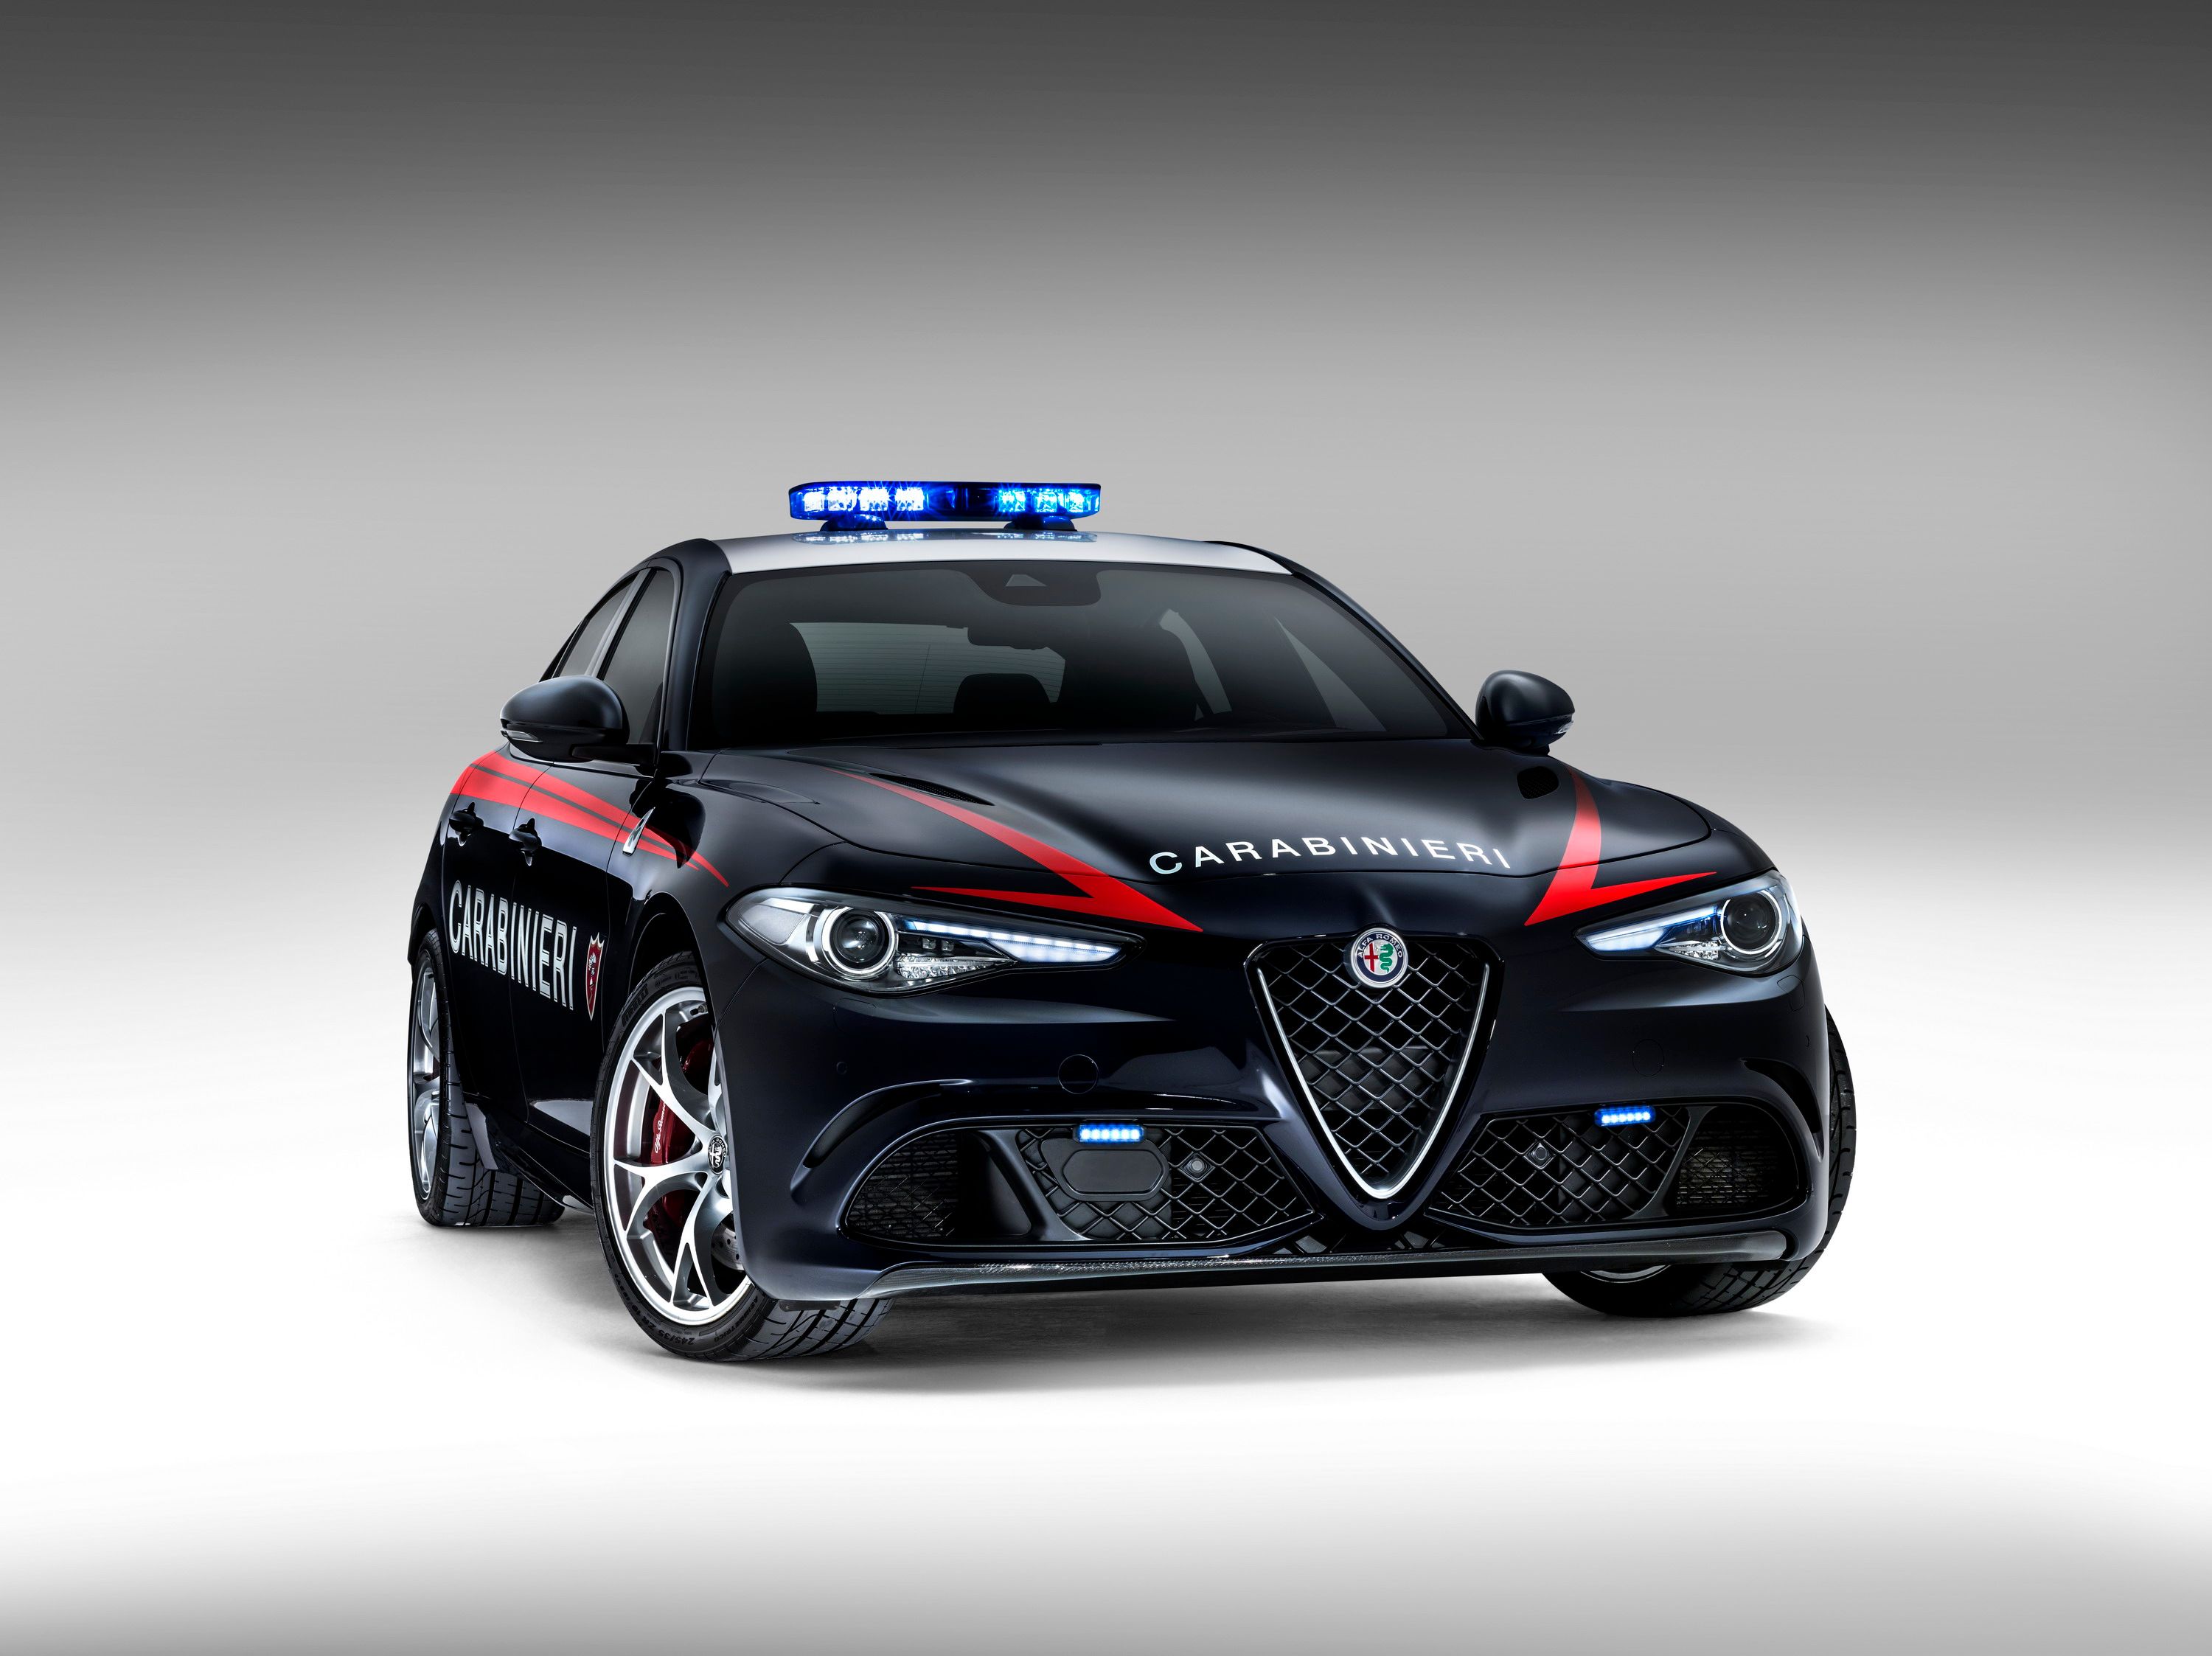 2016 Alfa Romeo Giulia QV Carabinieri